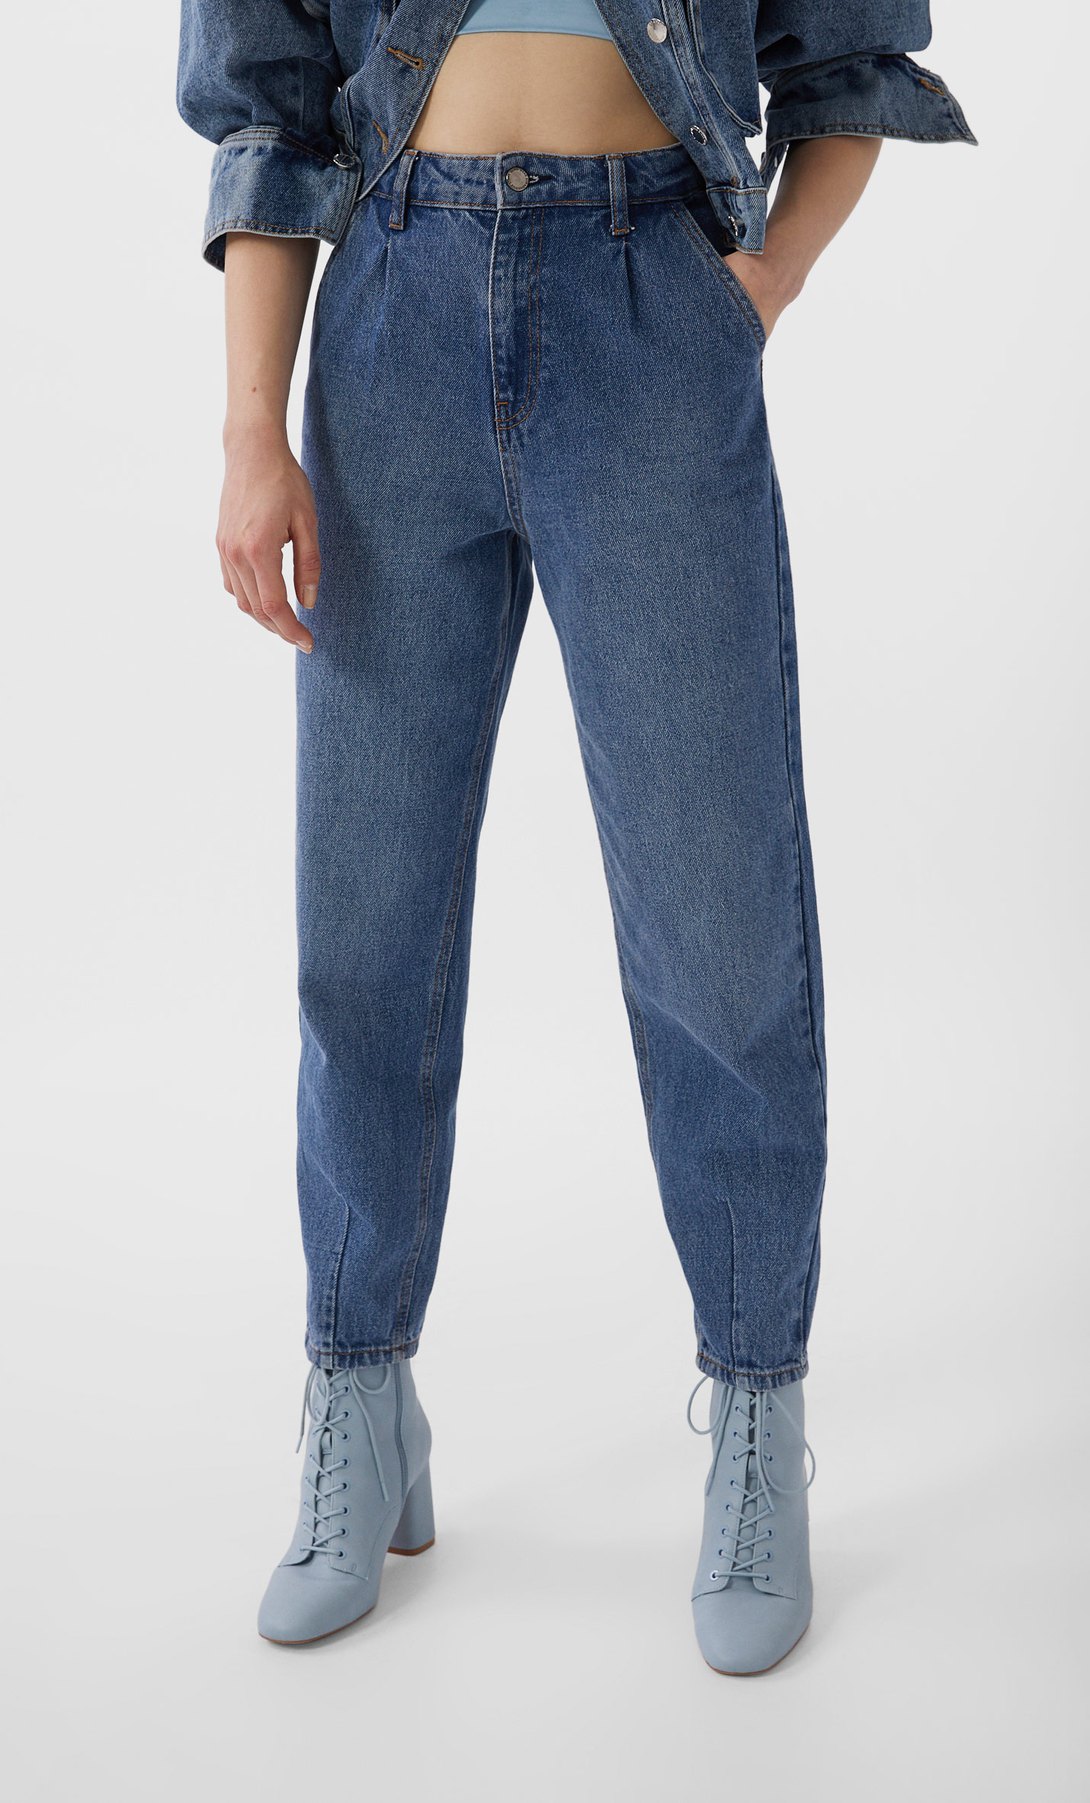 jeans slouchy stradivarius